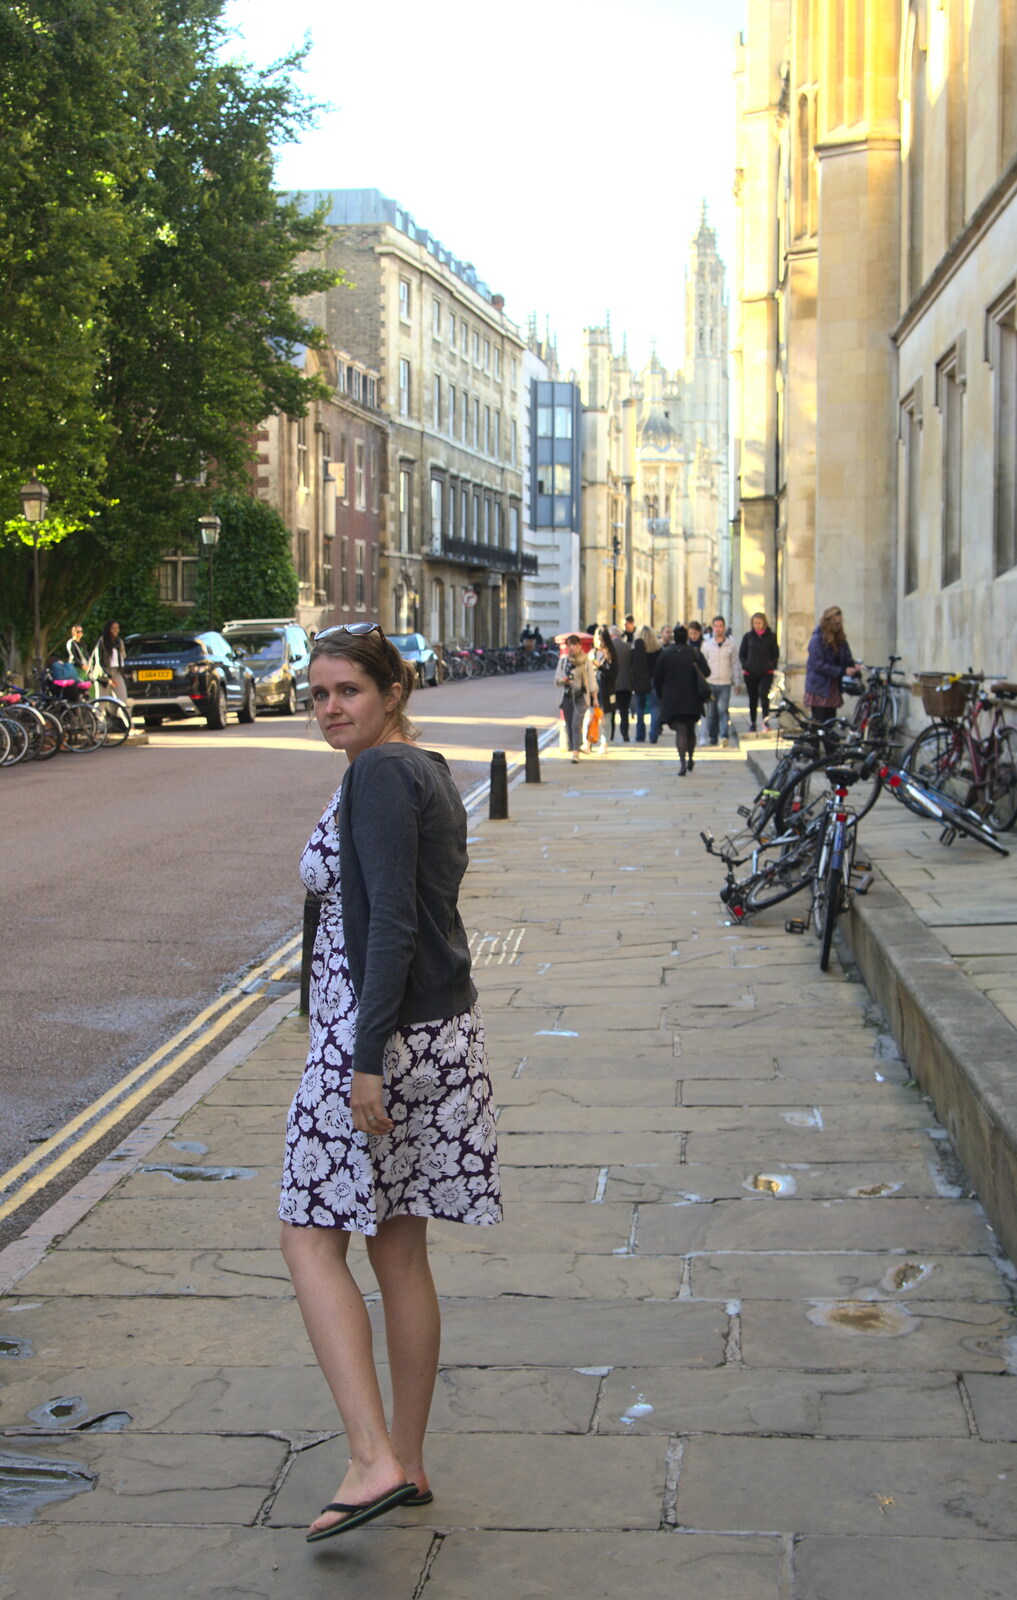 Back in the 'Bridge: an Anniversary, Cambridge - 3rd July 2016: Isobel looks round on Trumpington Street